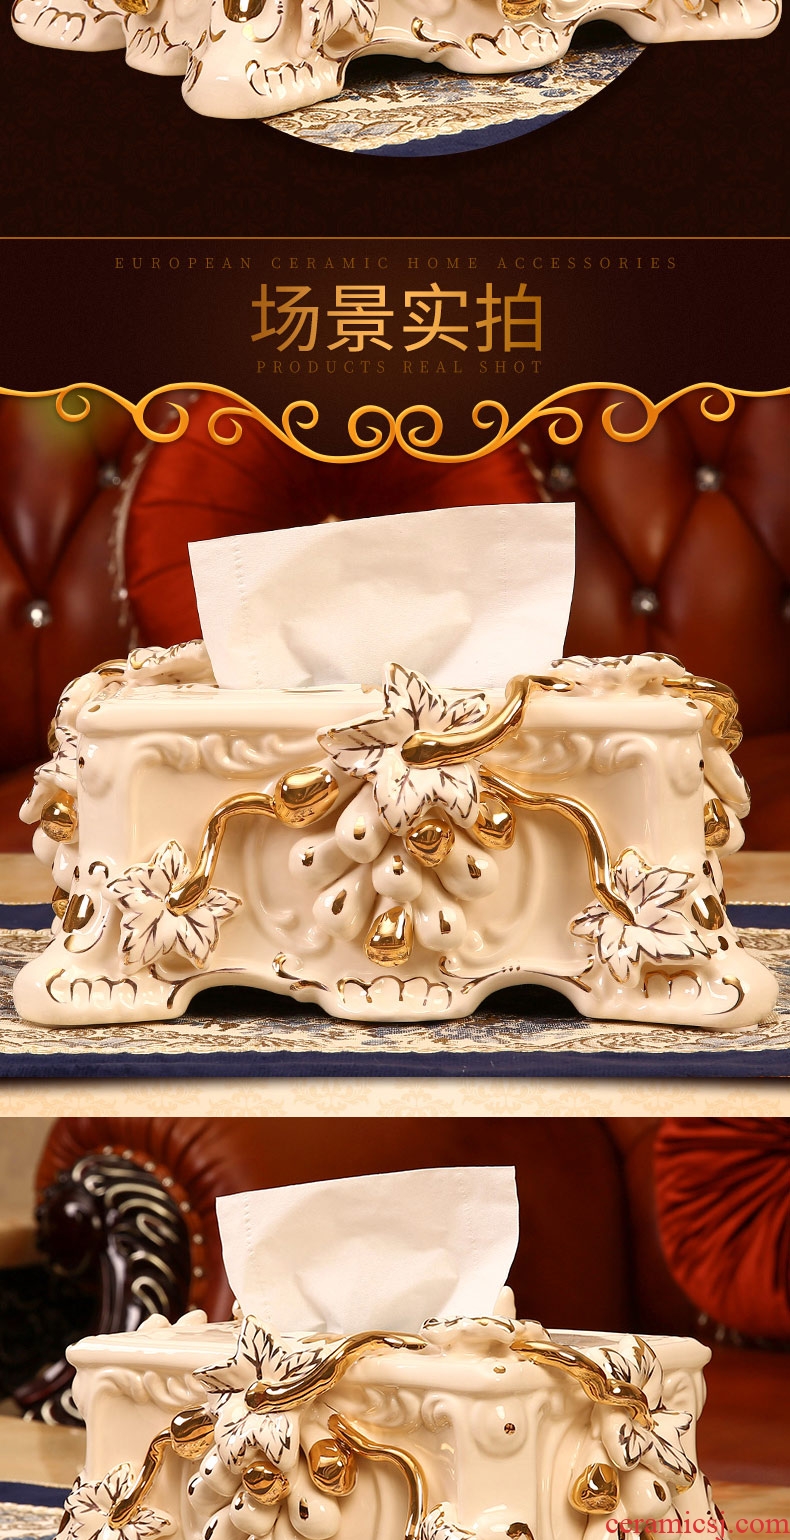 Vatican Sally's ceramic tissue box luxury european-style household smoke box sitting room tea table decorations furnishing articles wedding gift